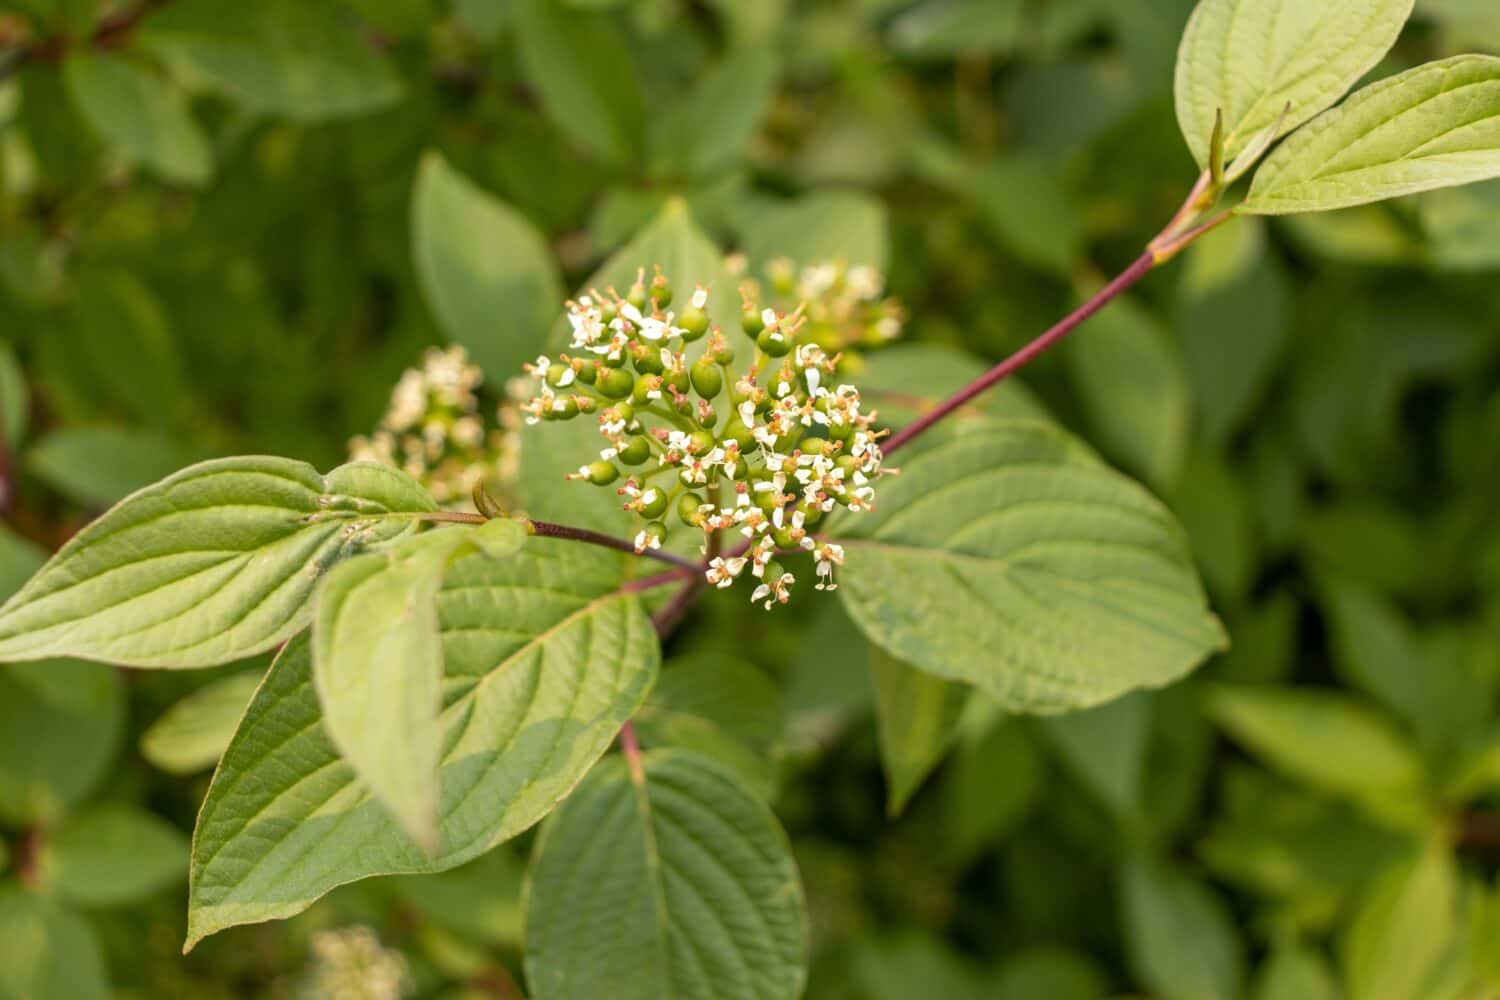 Close up of green flower berries on cornus dogwood tree - blurred background